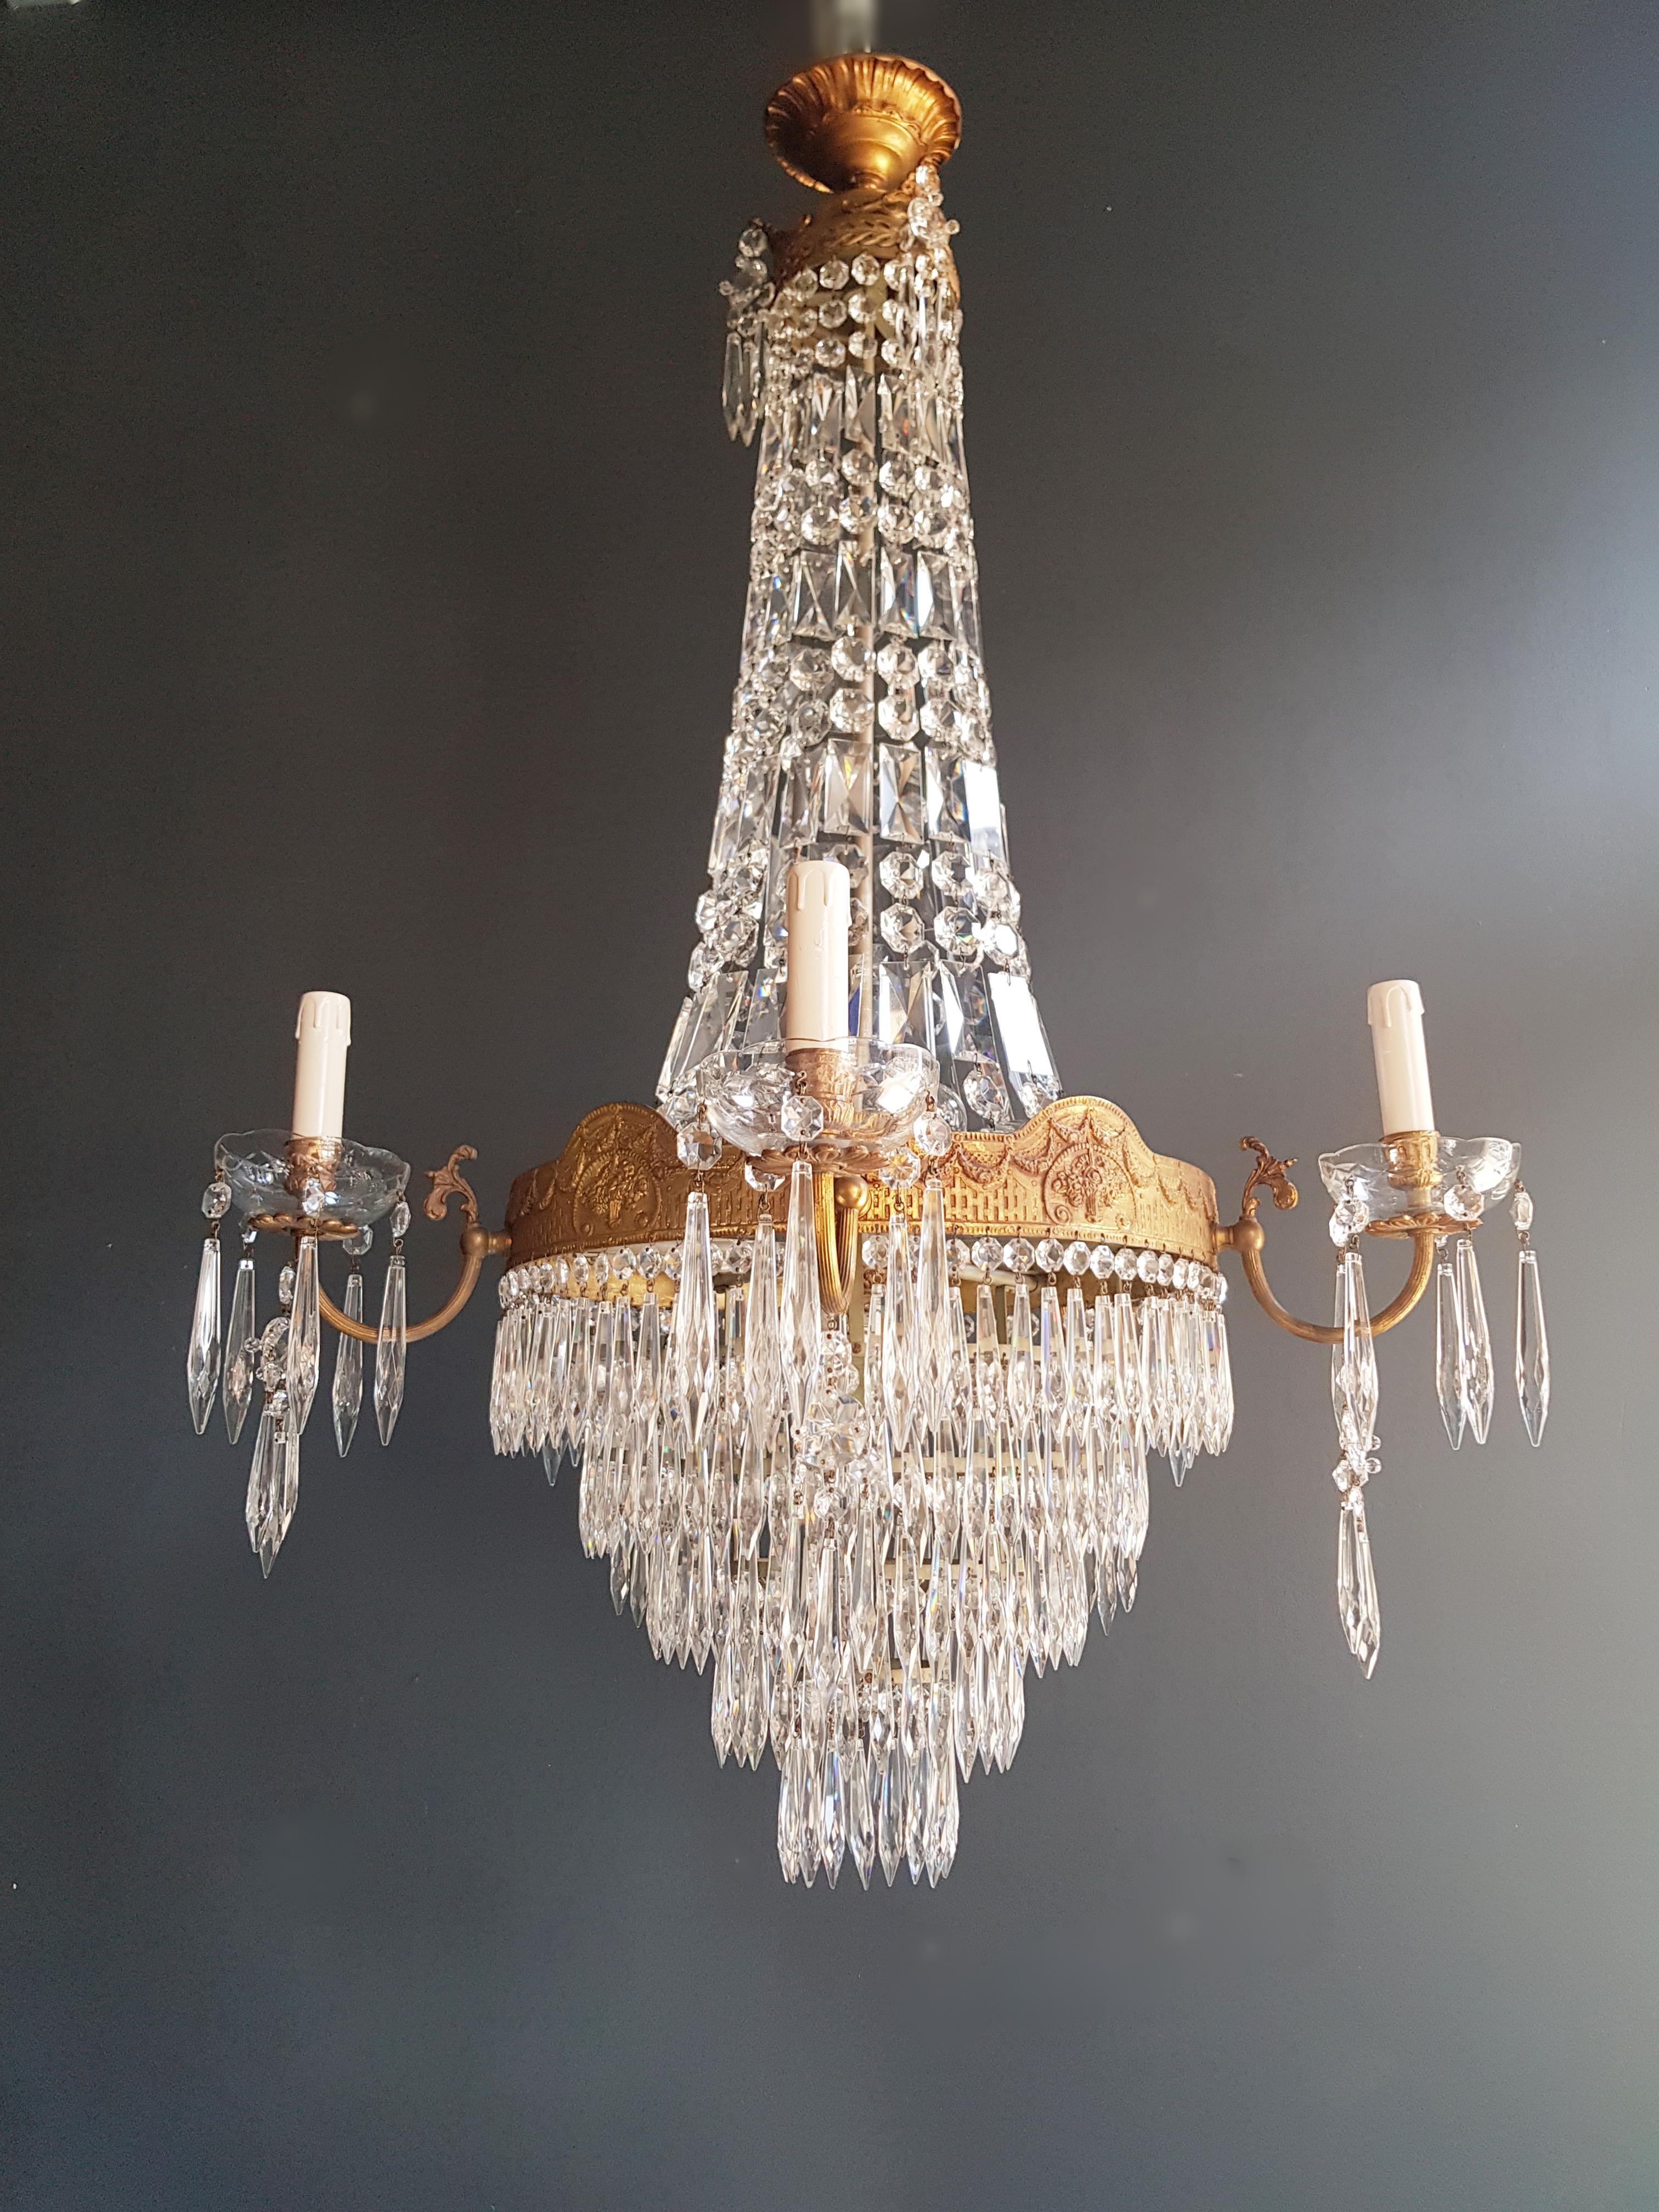 Montgolfiè Empire Sac a Pearl Chandelier Crystal Lustre Ceiling Lamp Antique WoW 5